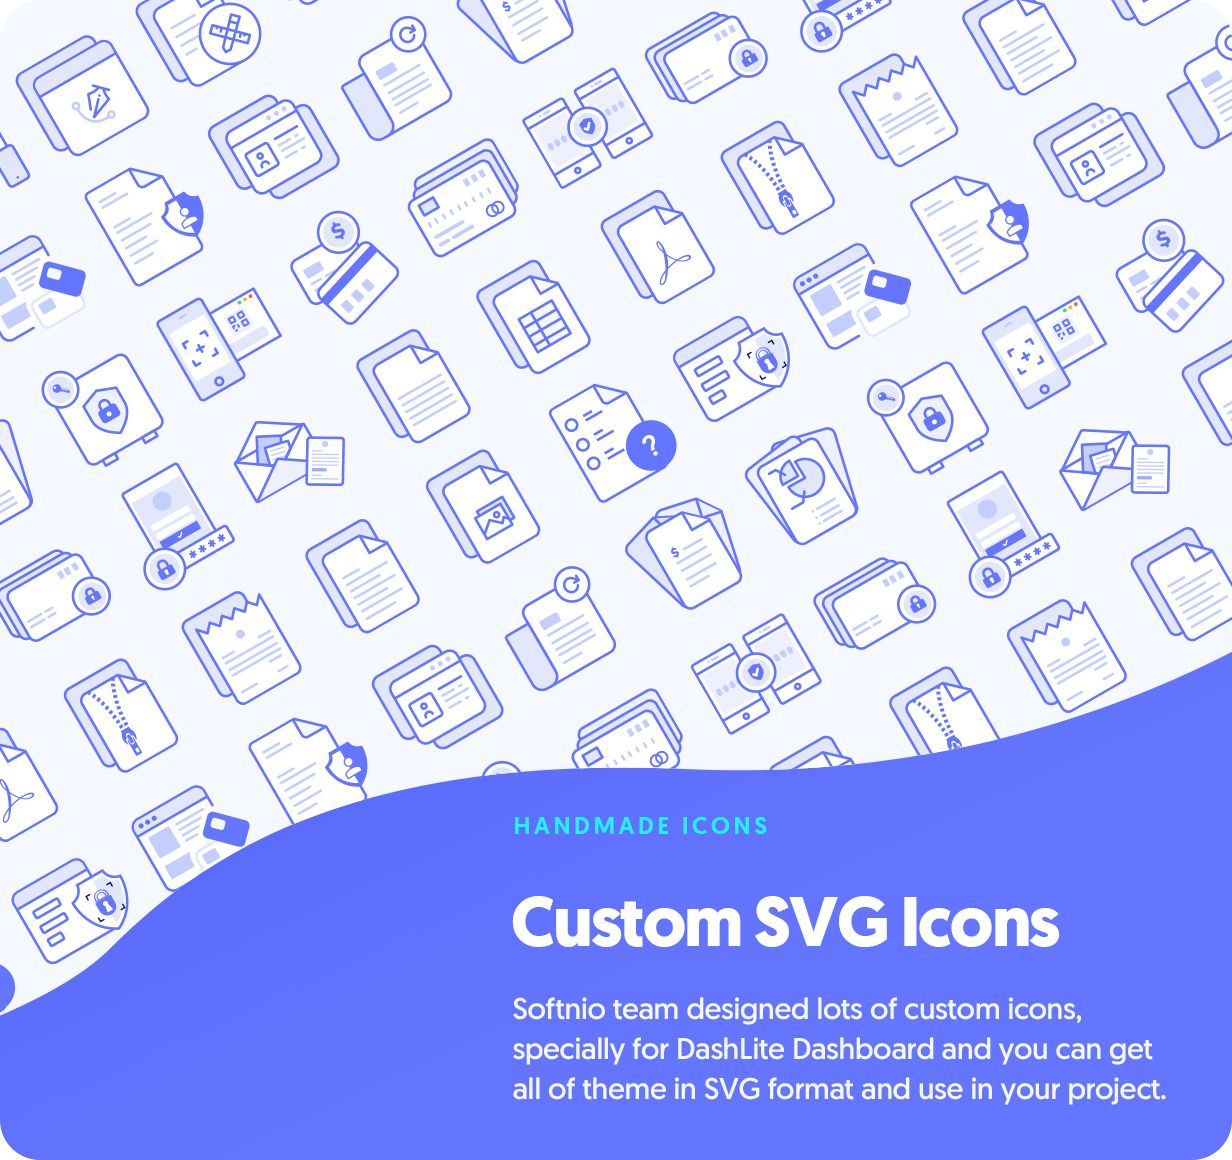 DashLite - Custom Handmade SVG Icons